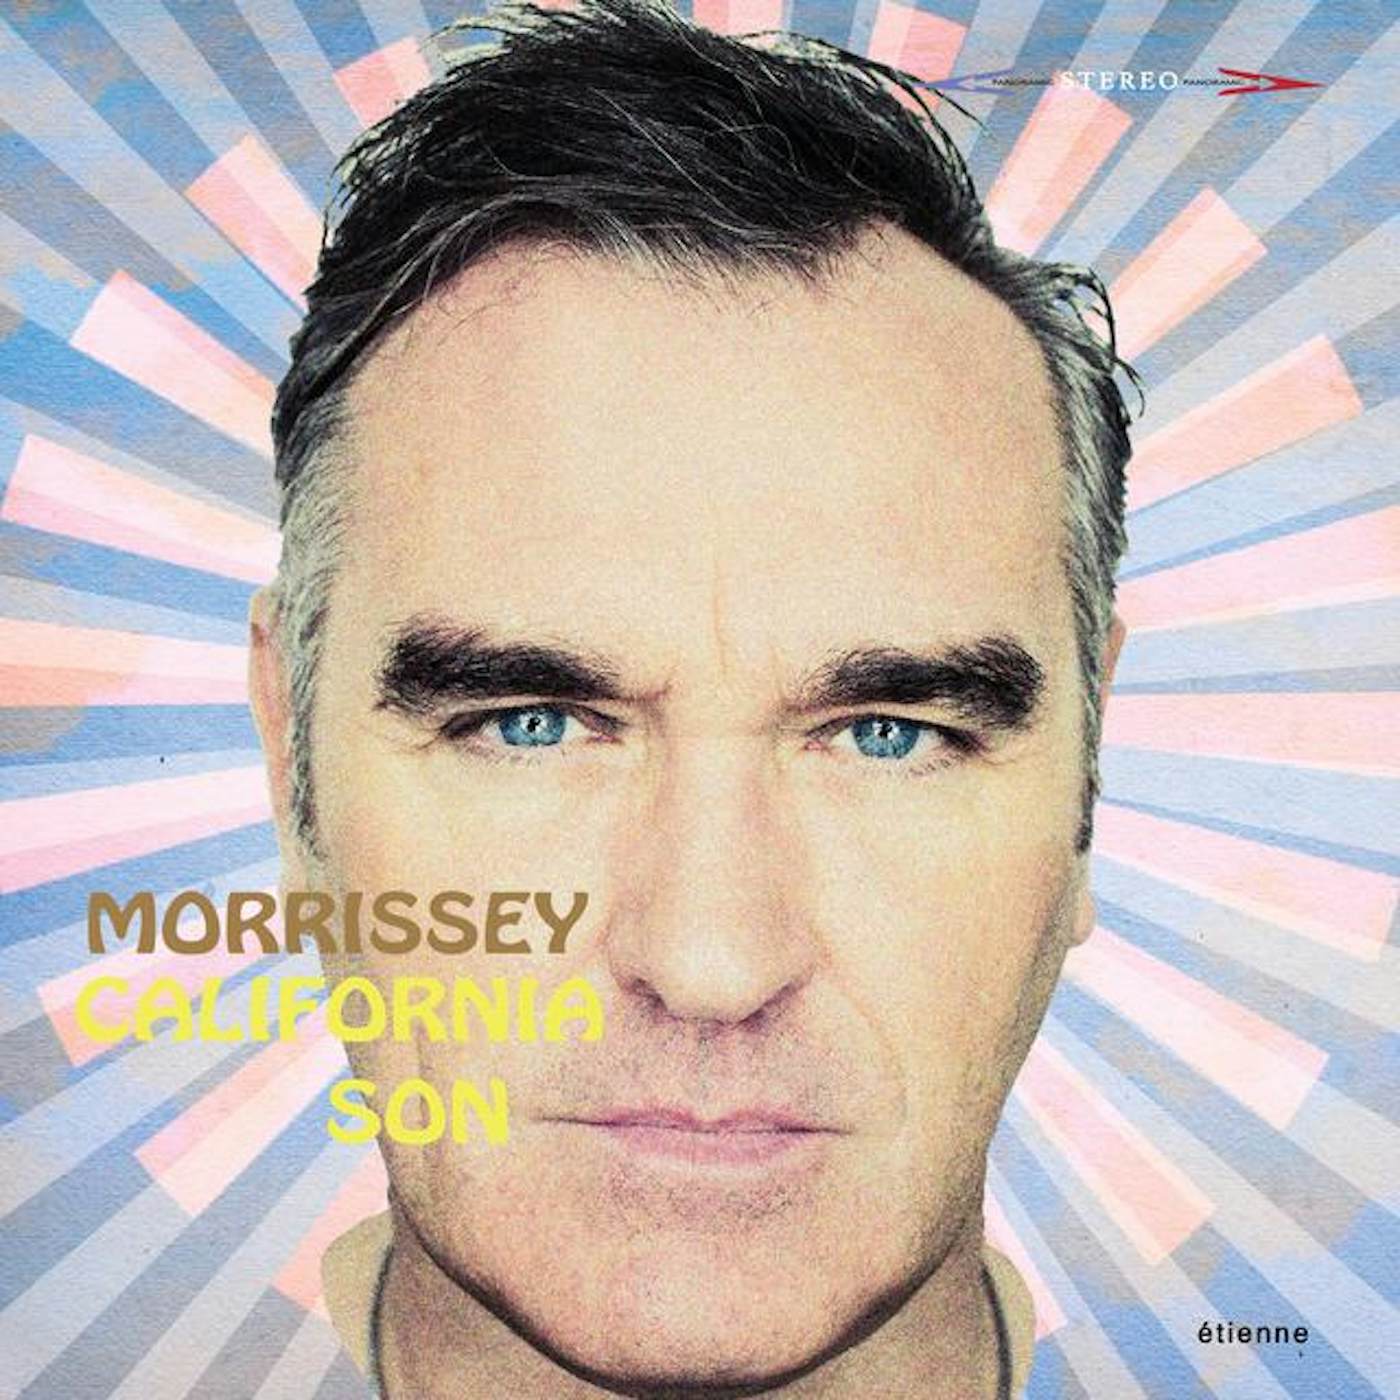 Morrissey California Son Vinyl Record